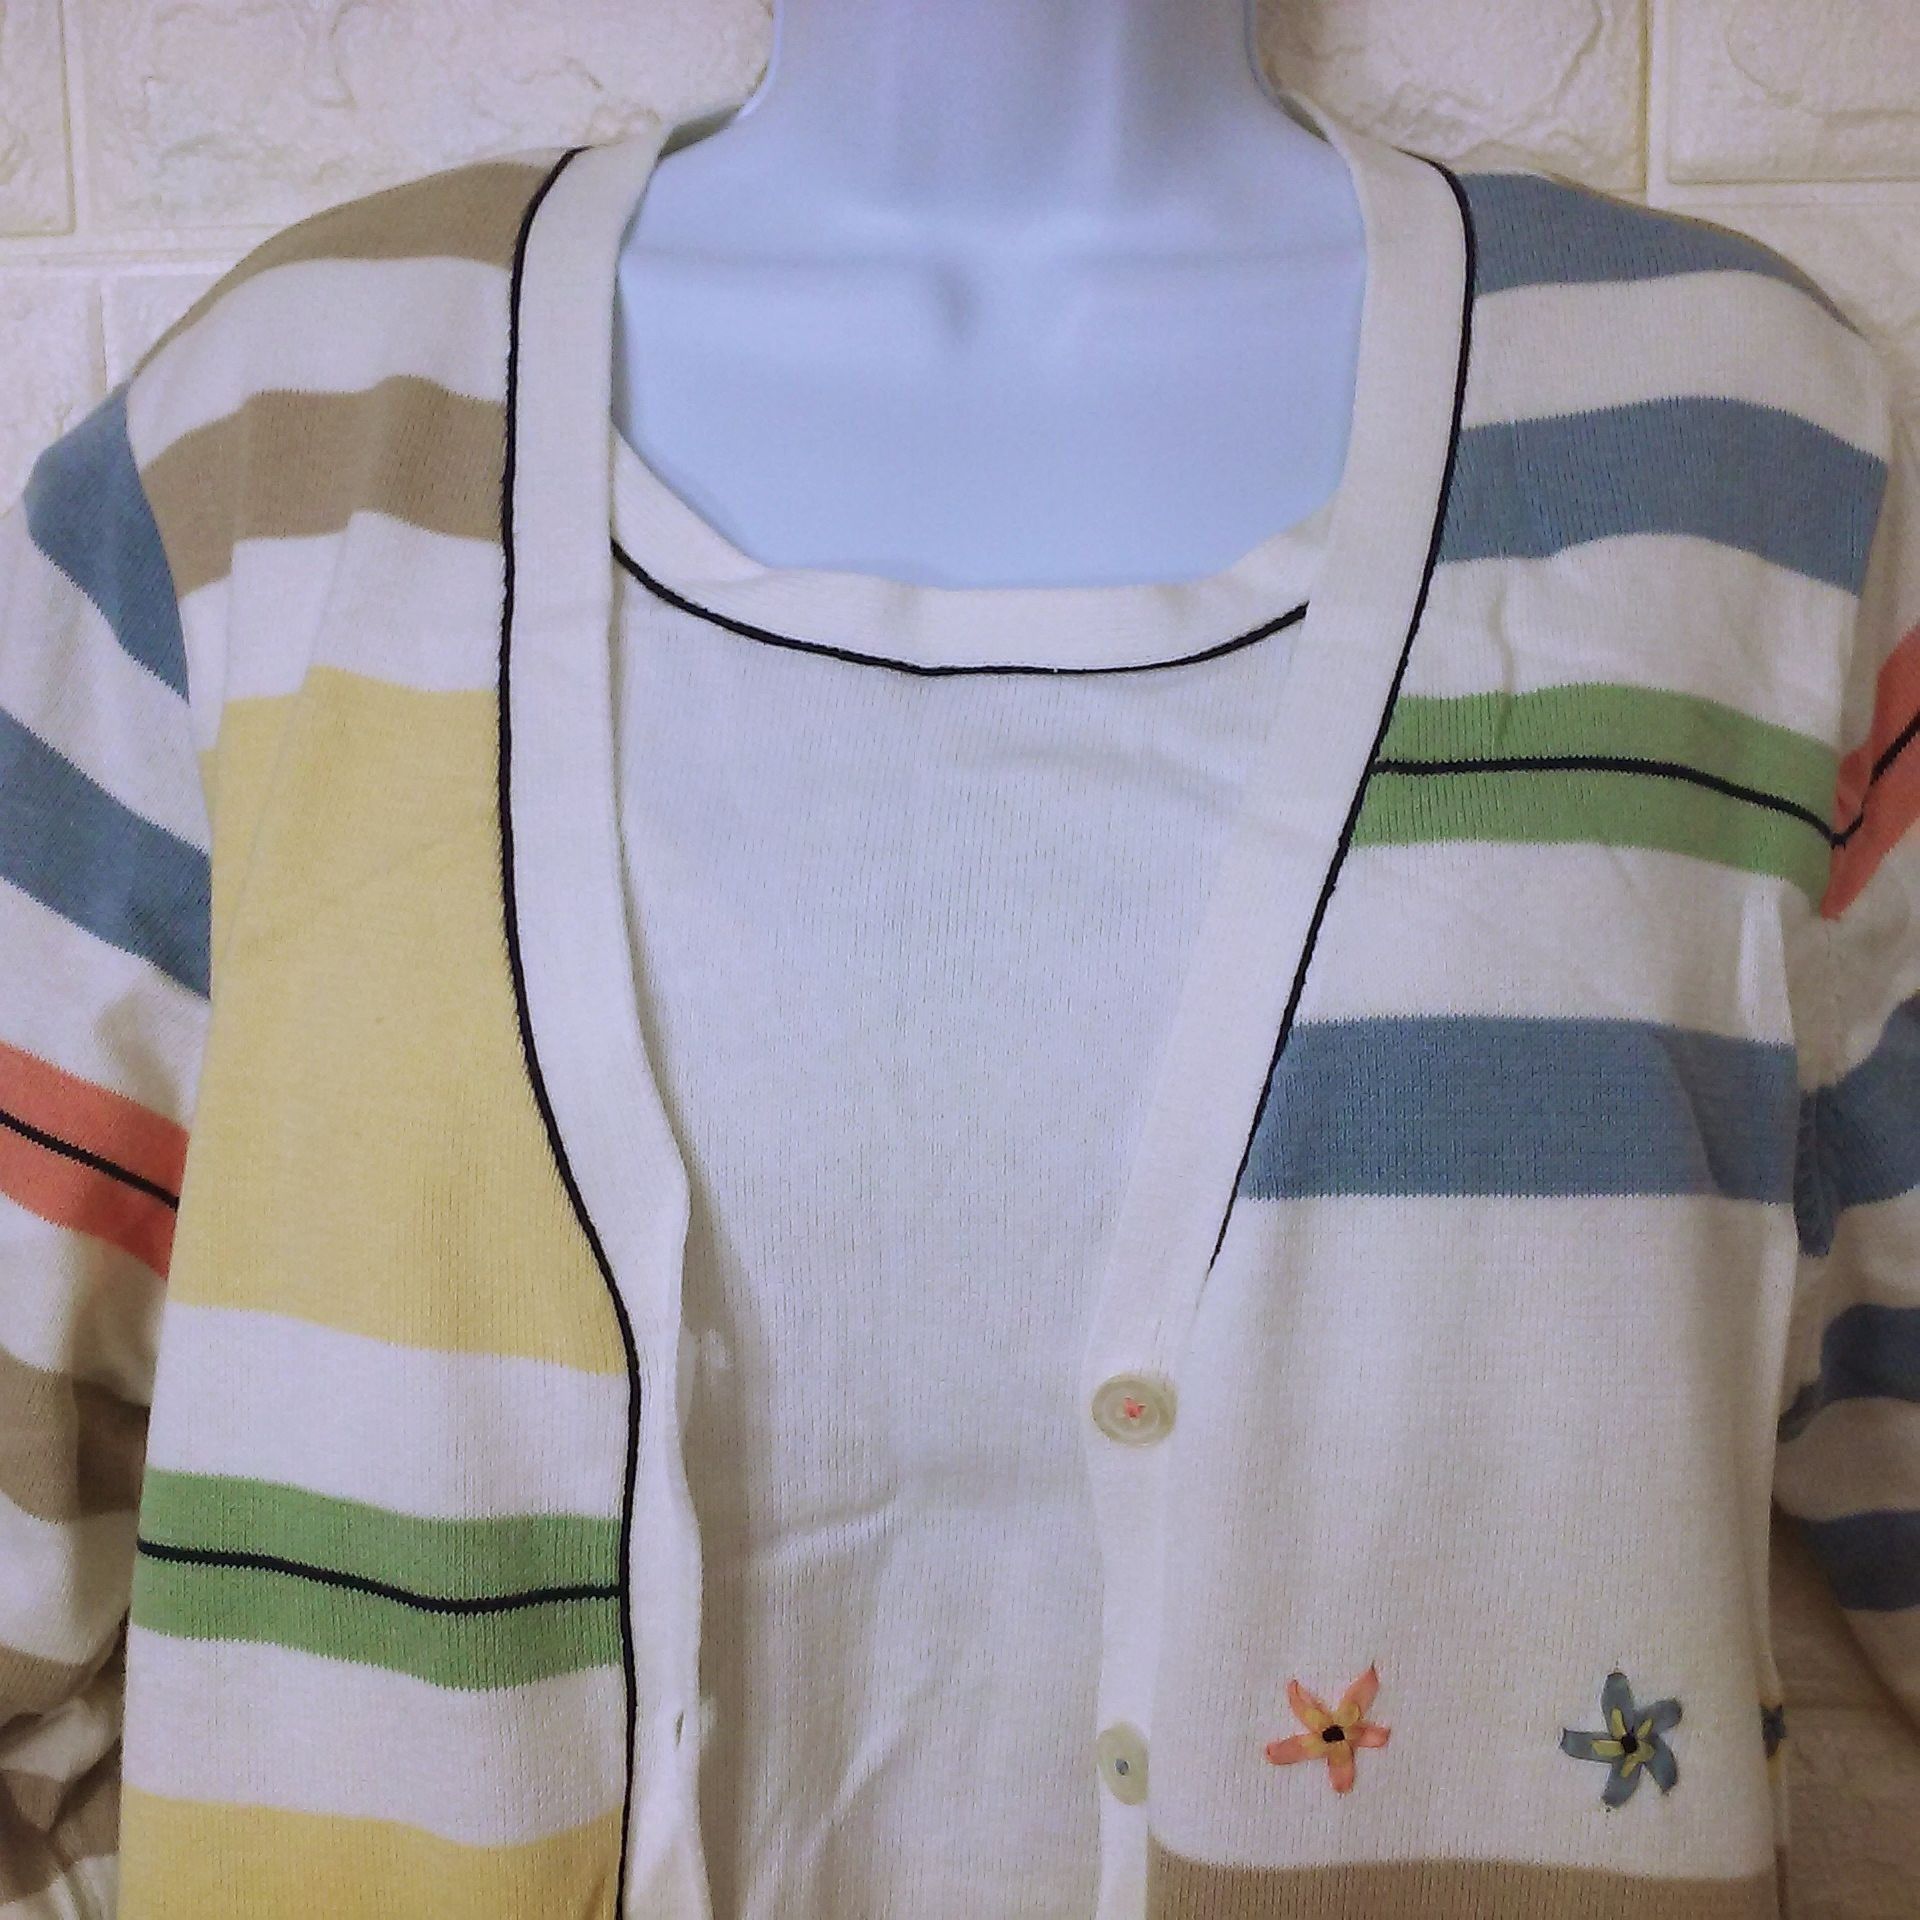 Vintage 90s Koret Knit Cardigan Top Novelty Sweater Striped Classic Size L / US 10 / IT 46 - 6 Thumbnail